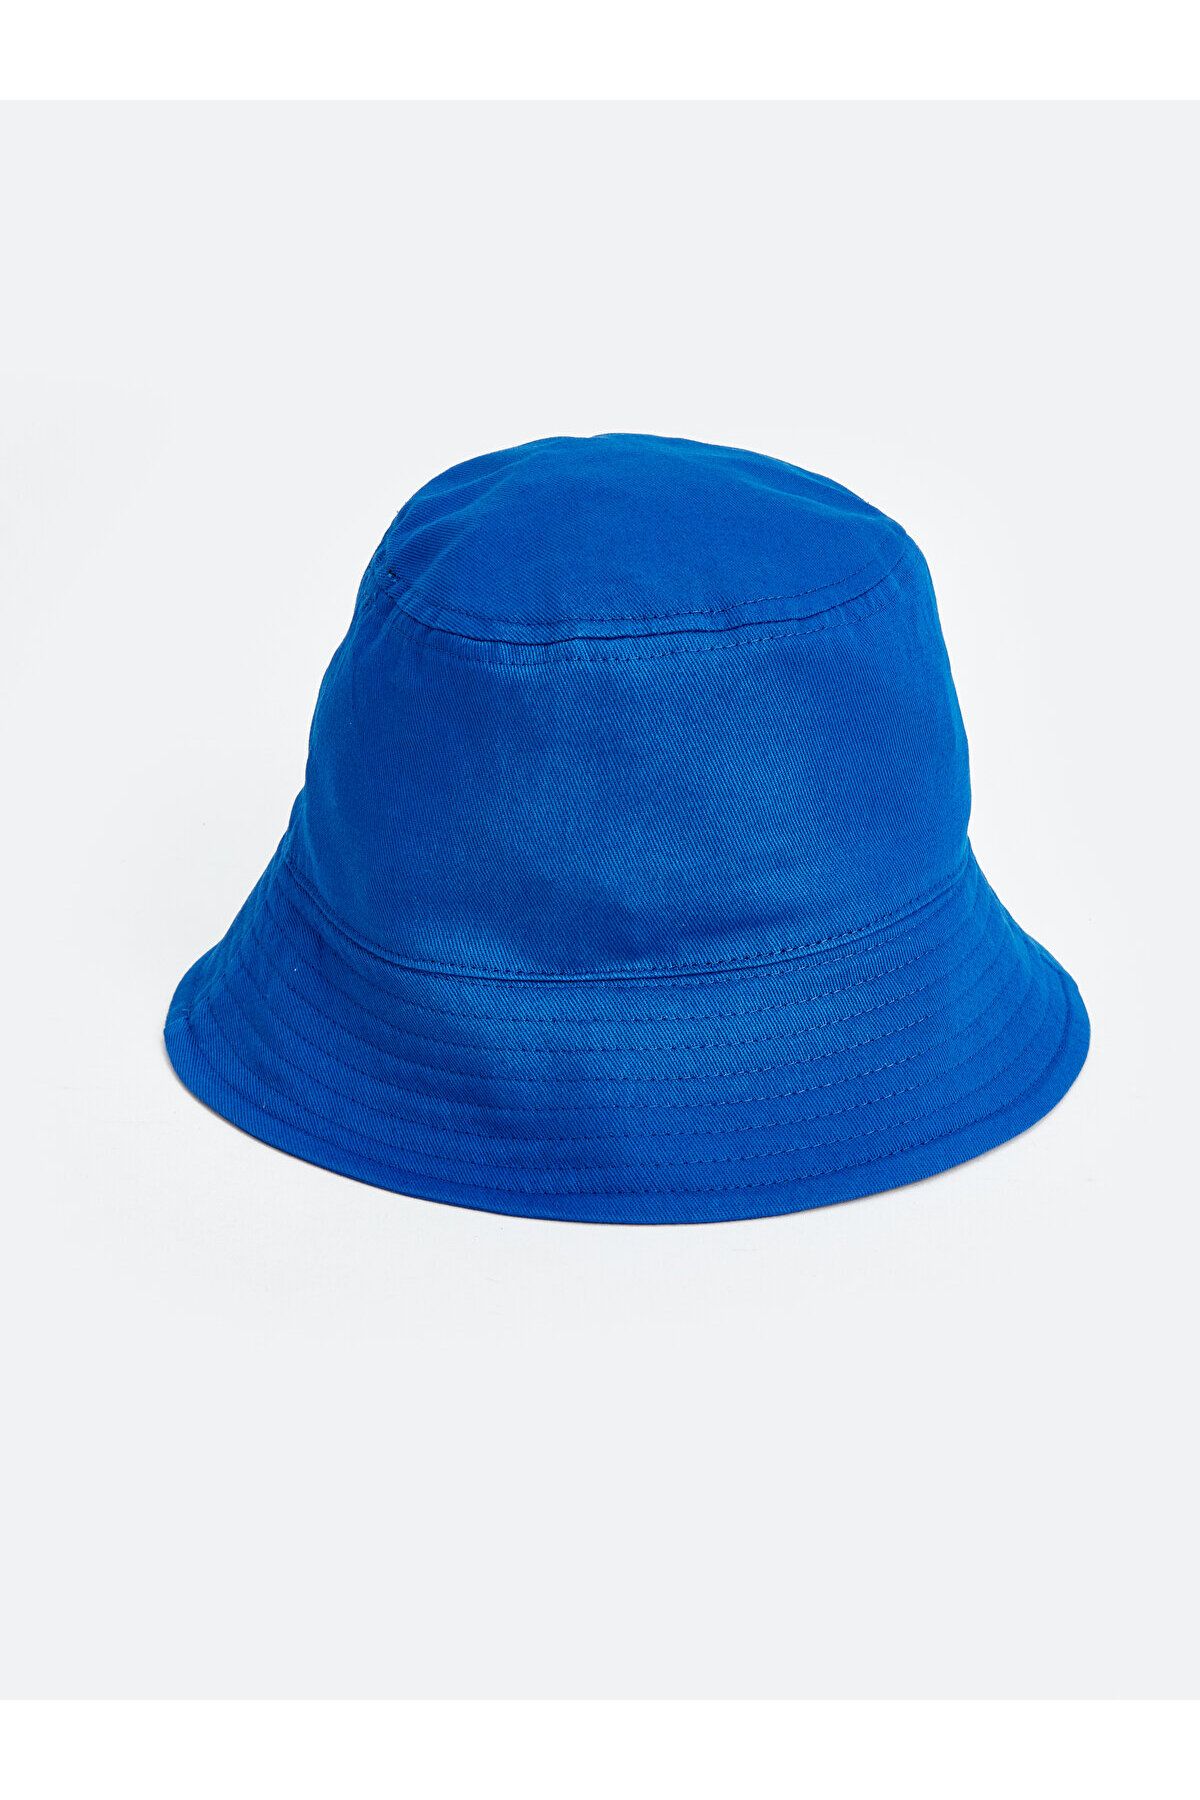 LC Waikiki Kadın Bucket Şapka